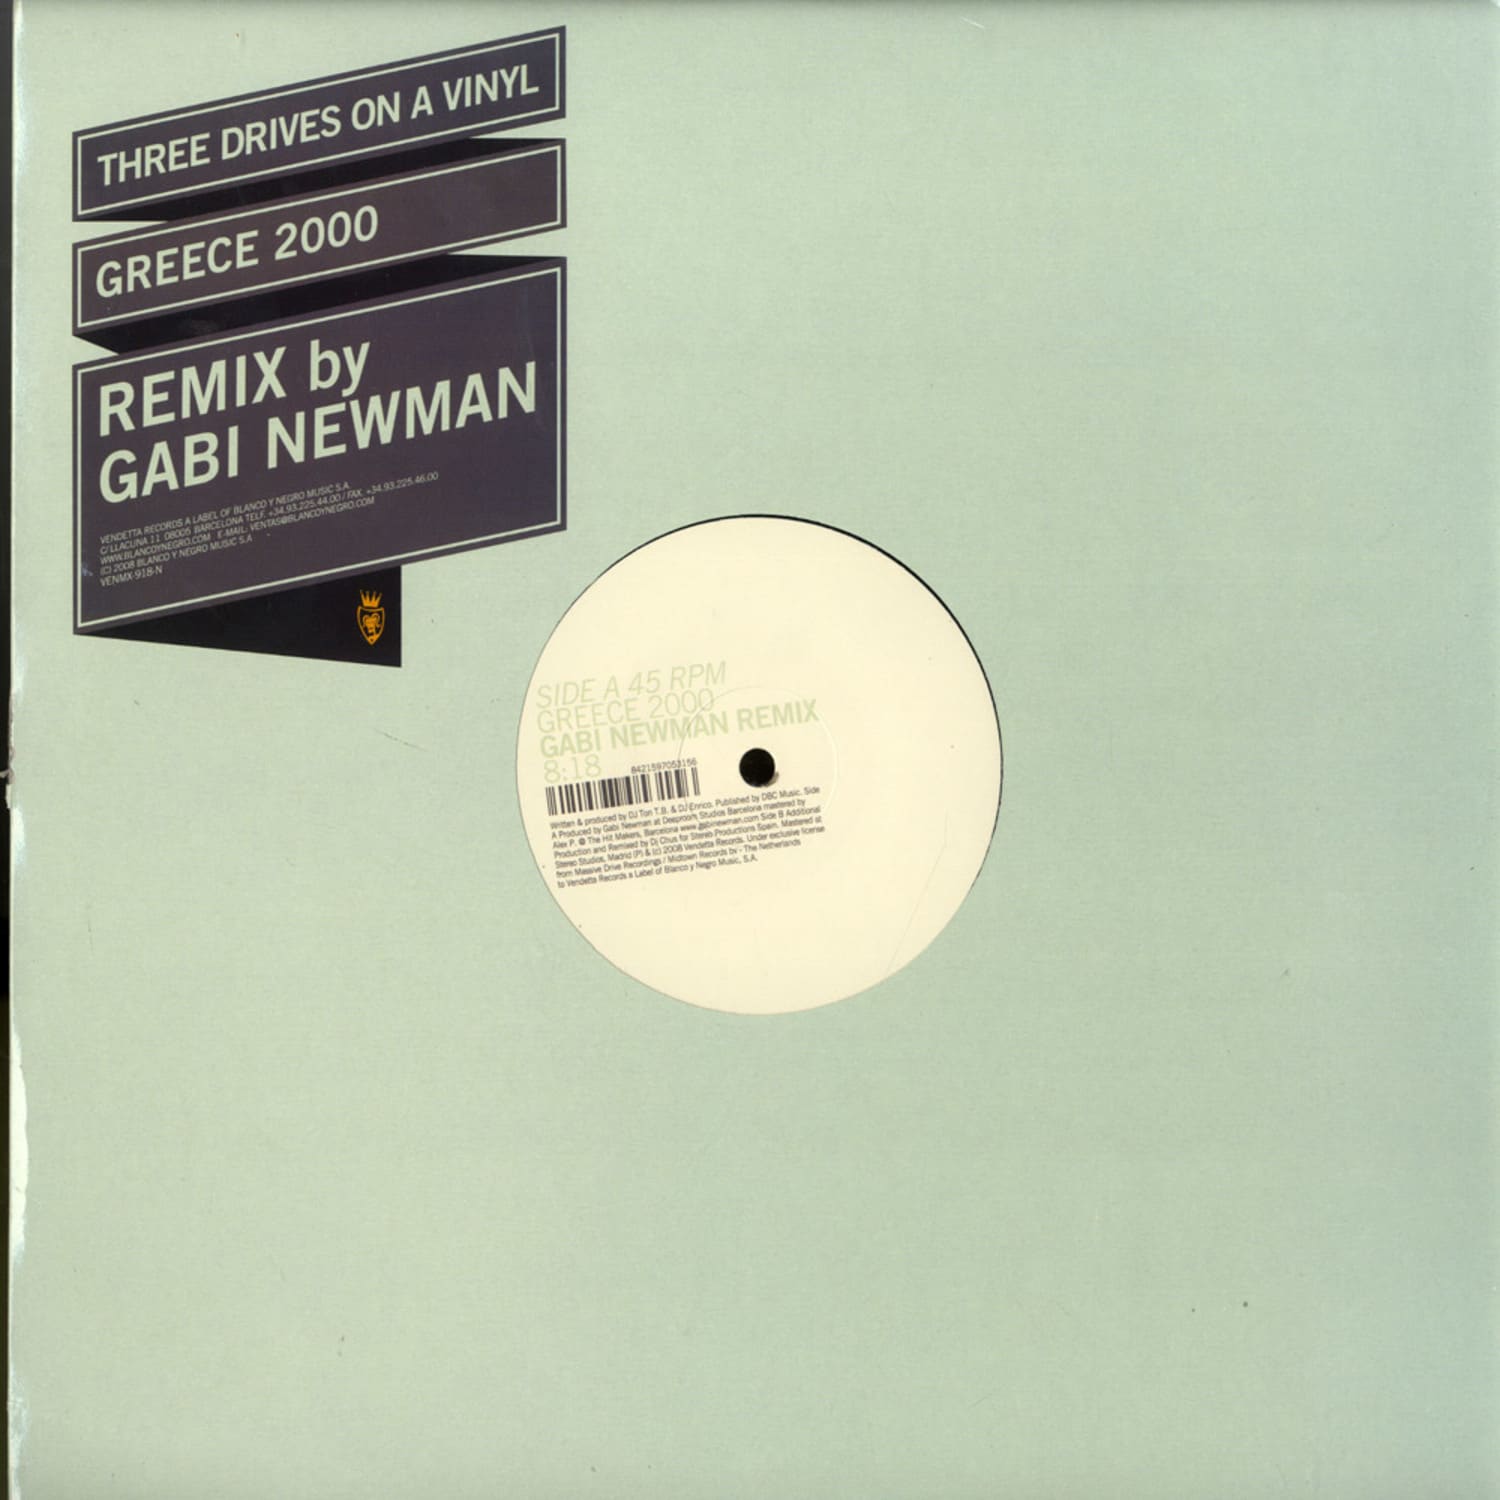 Three Drives On A Vinyl - GREECE 2000 - GABI NEWMAN REMIXES